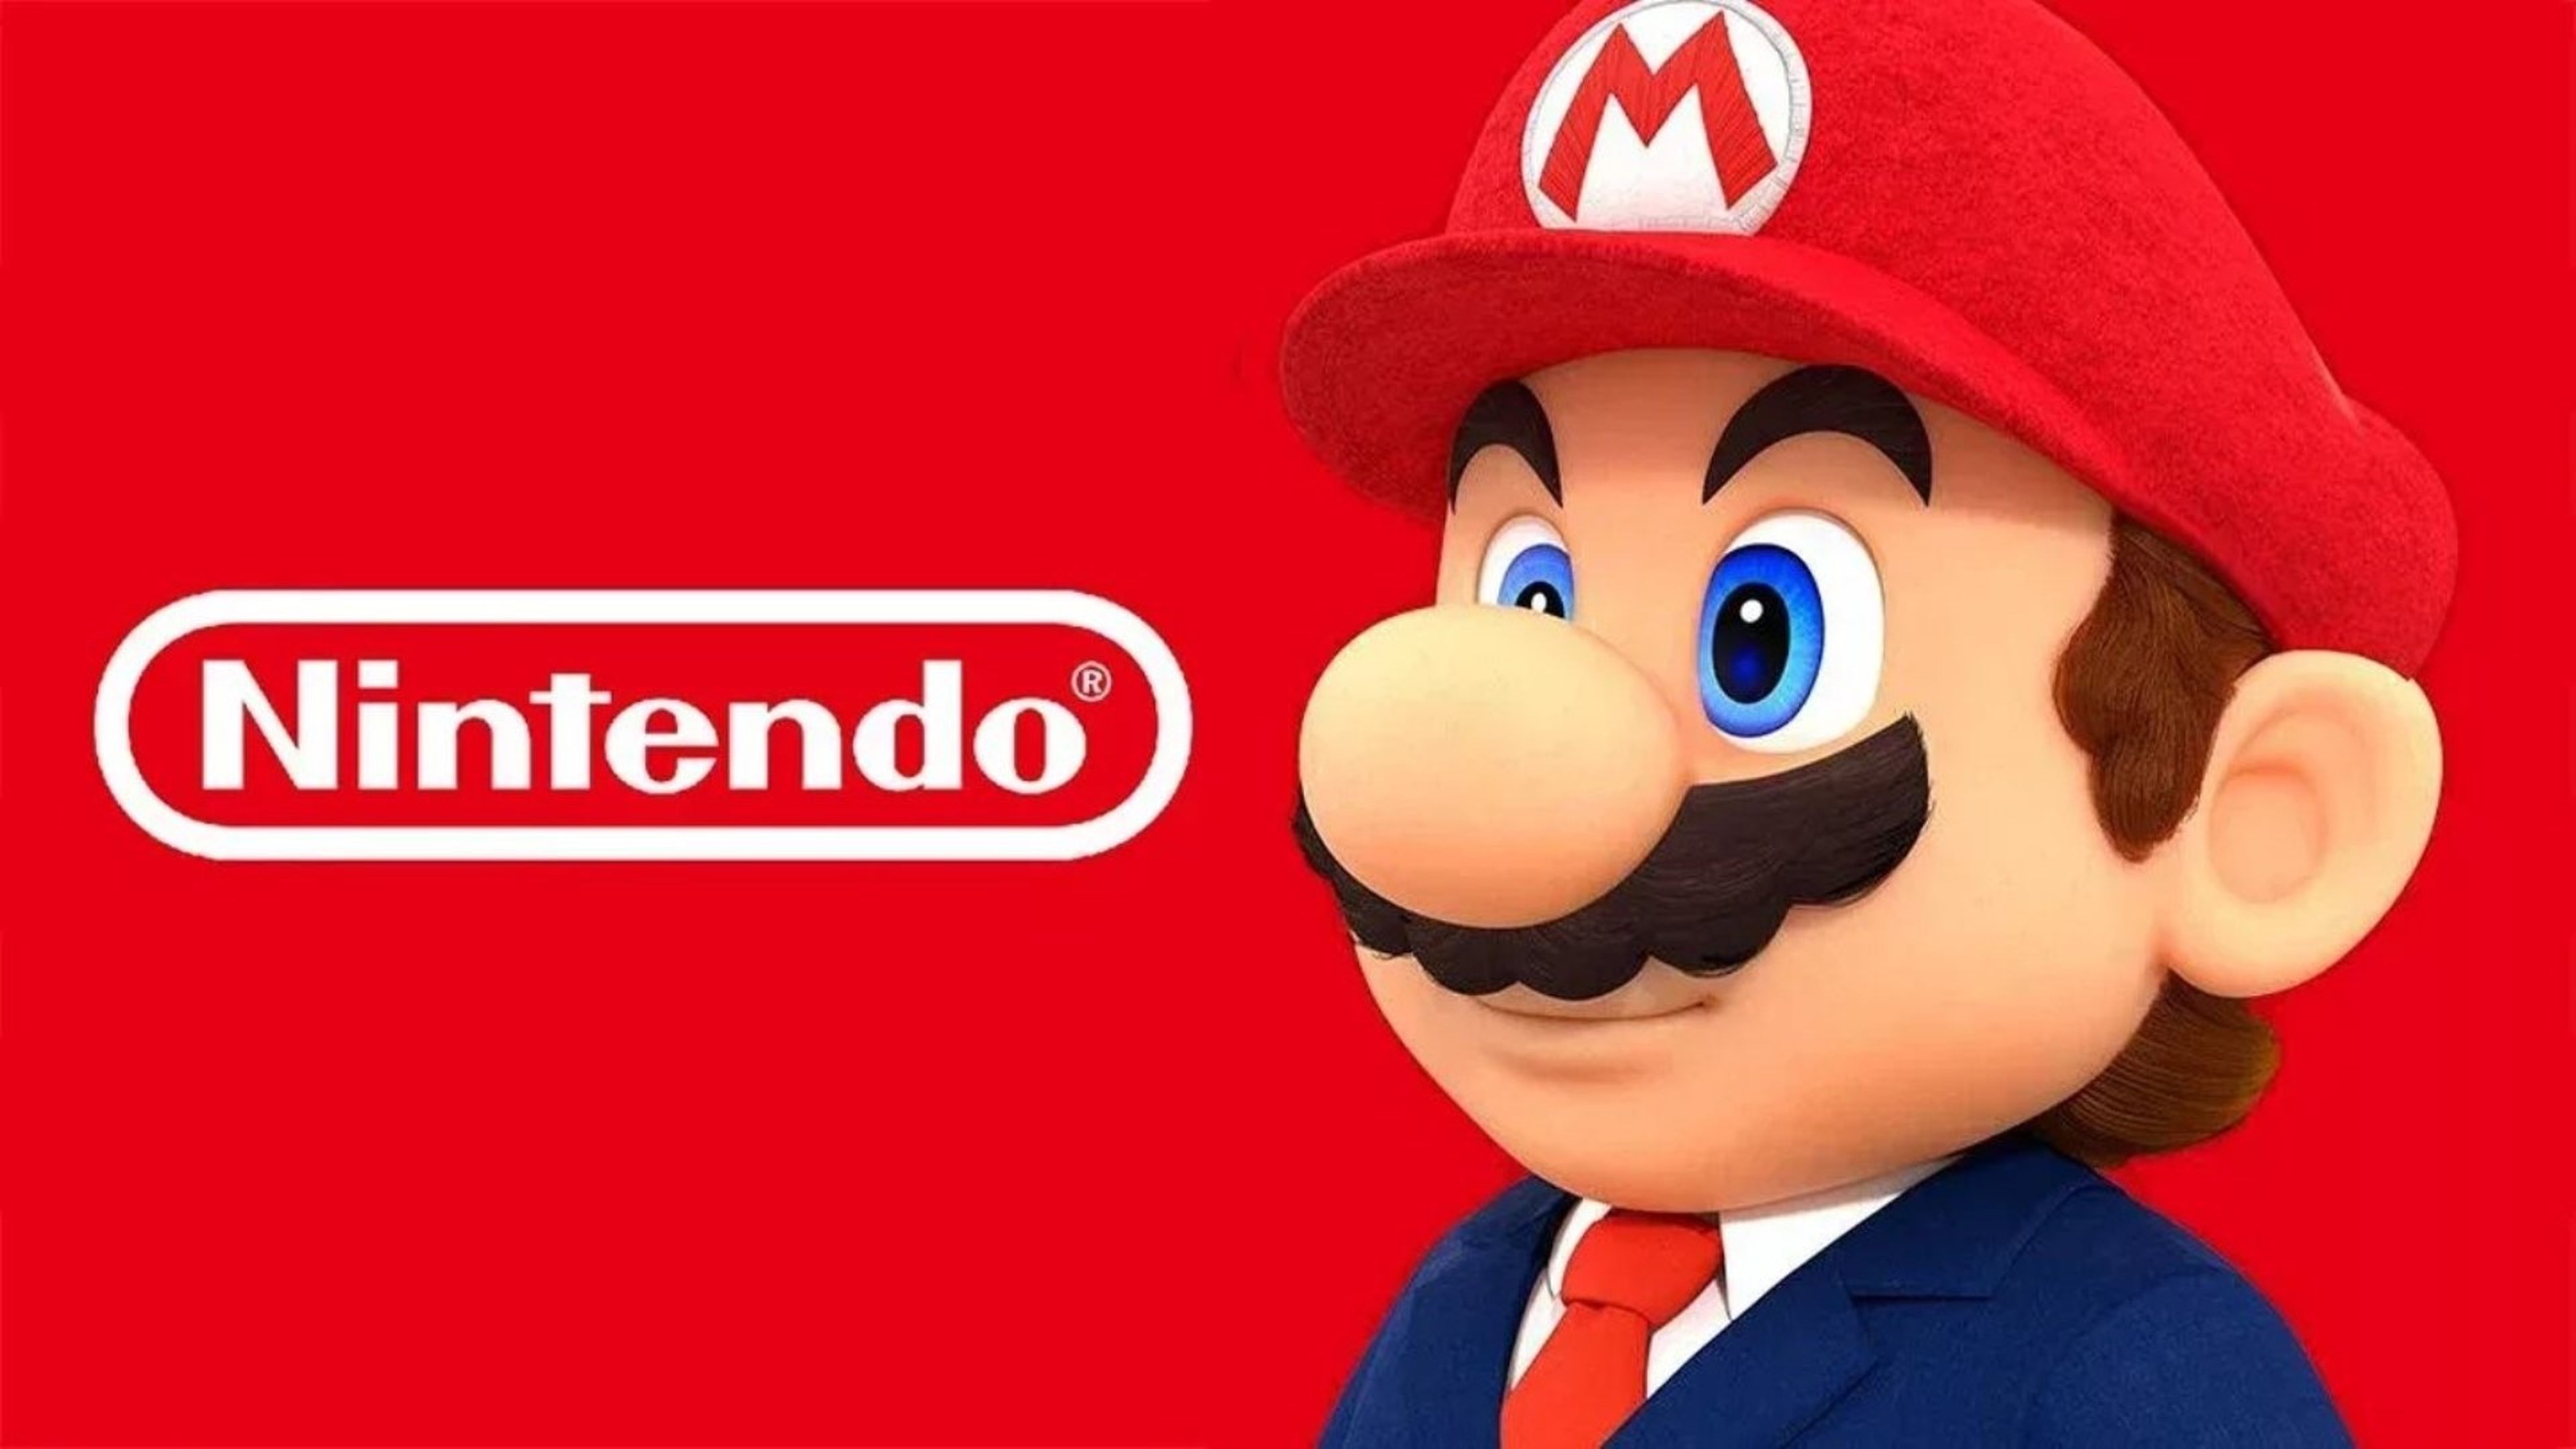 Nintendo - Mario traje